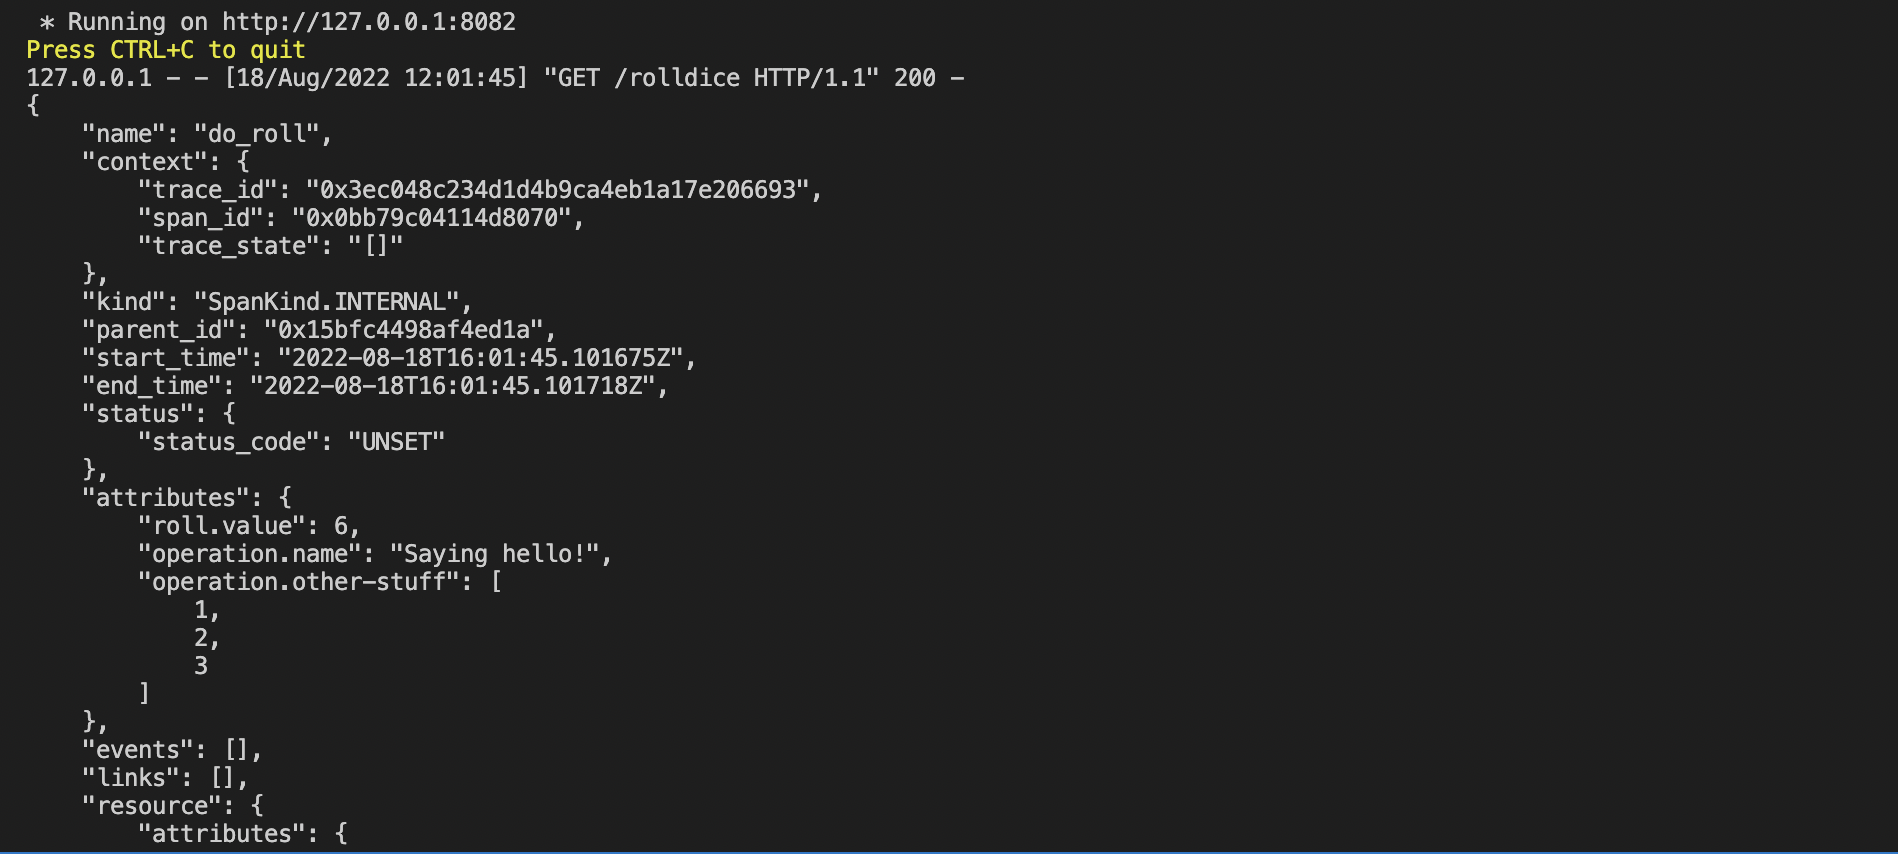 Screen capture of Python server output after client call